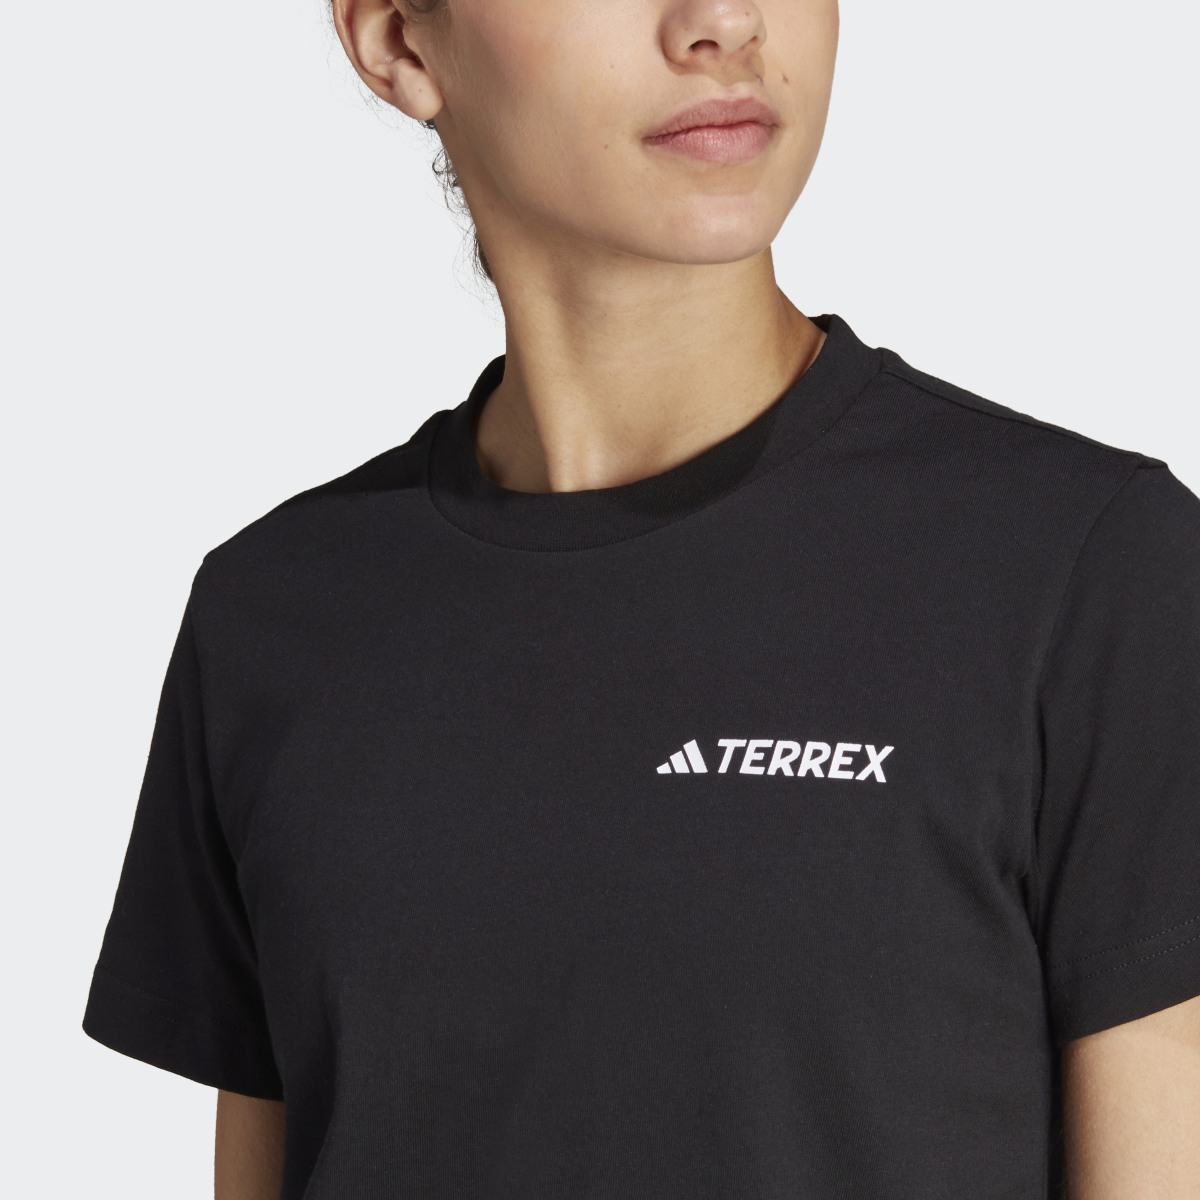 Adidas T-shirt Altitude TERREX. 6